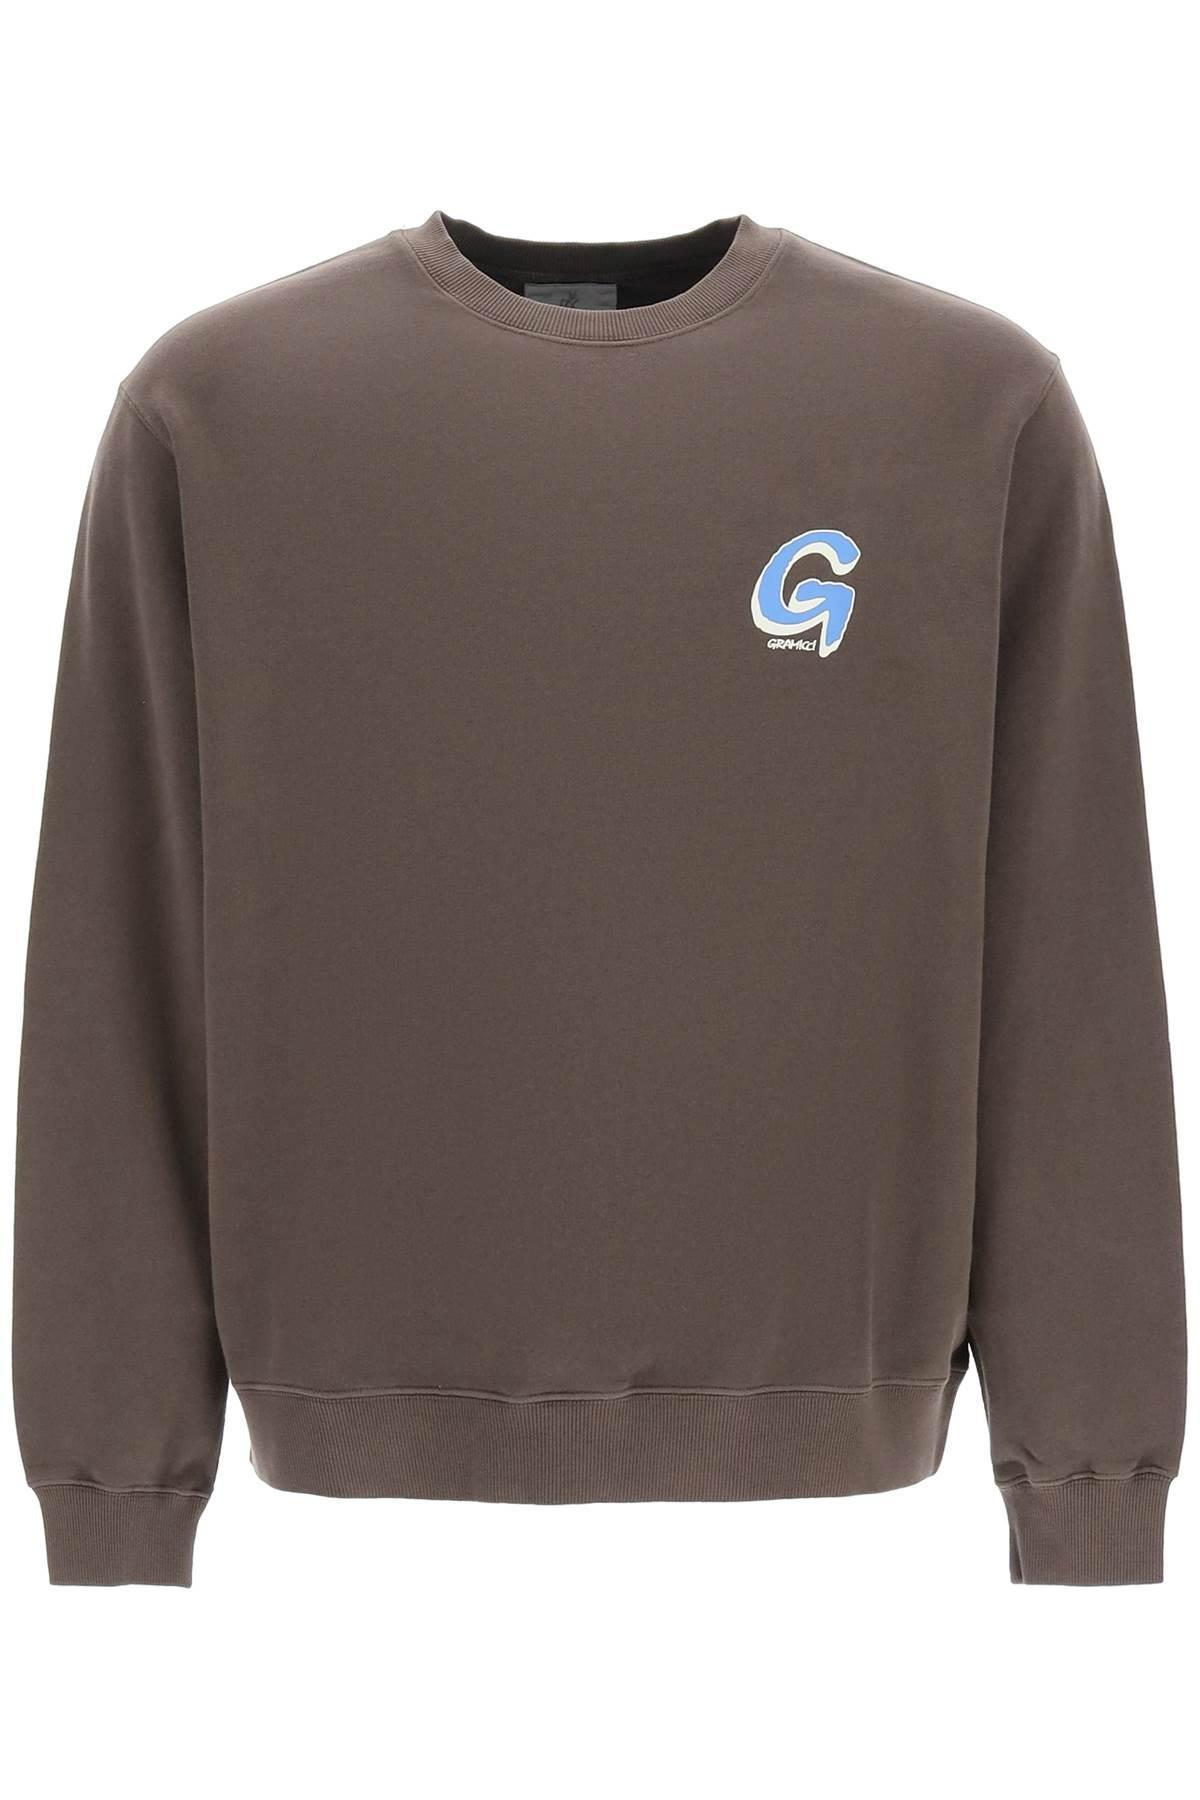 Gramicci Big G-logo Sweatshirt in Brown for Men | Lyst